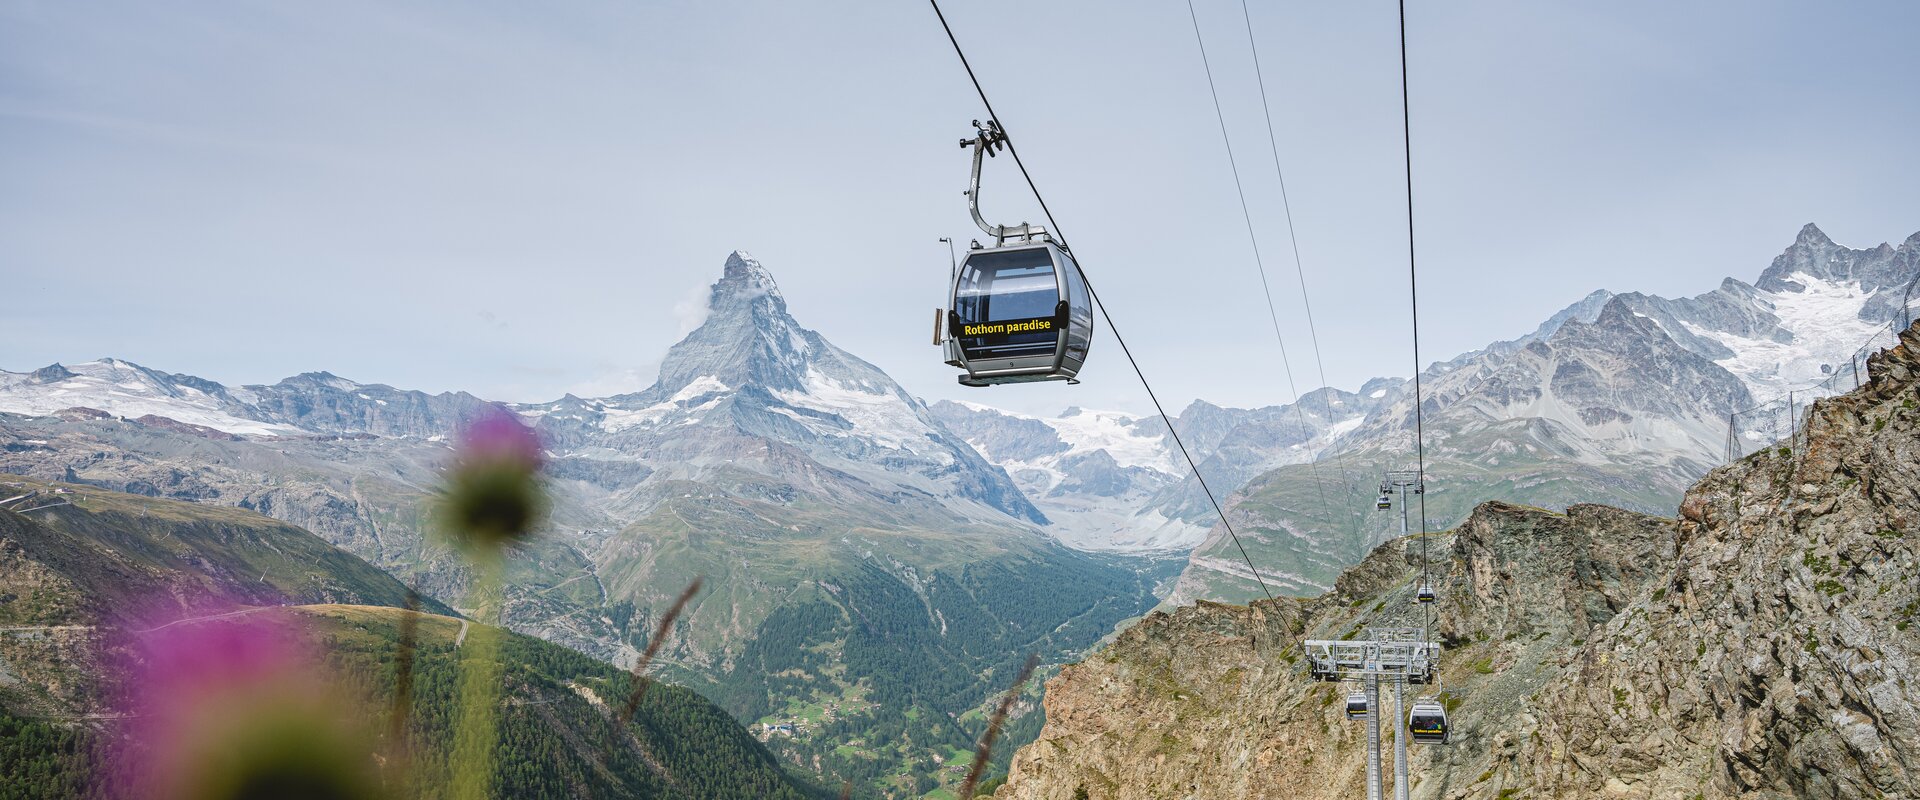 The combi cable car runs between Sunnegga and Blauherd and the Matterhorn can be seen in the background. | © Christian Pfammatter